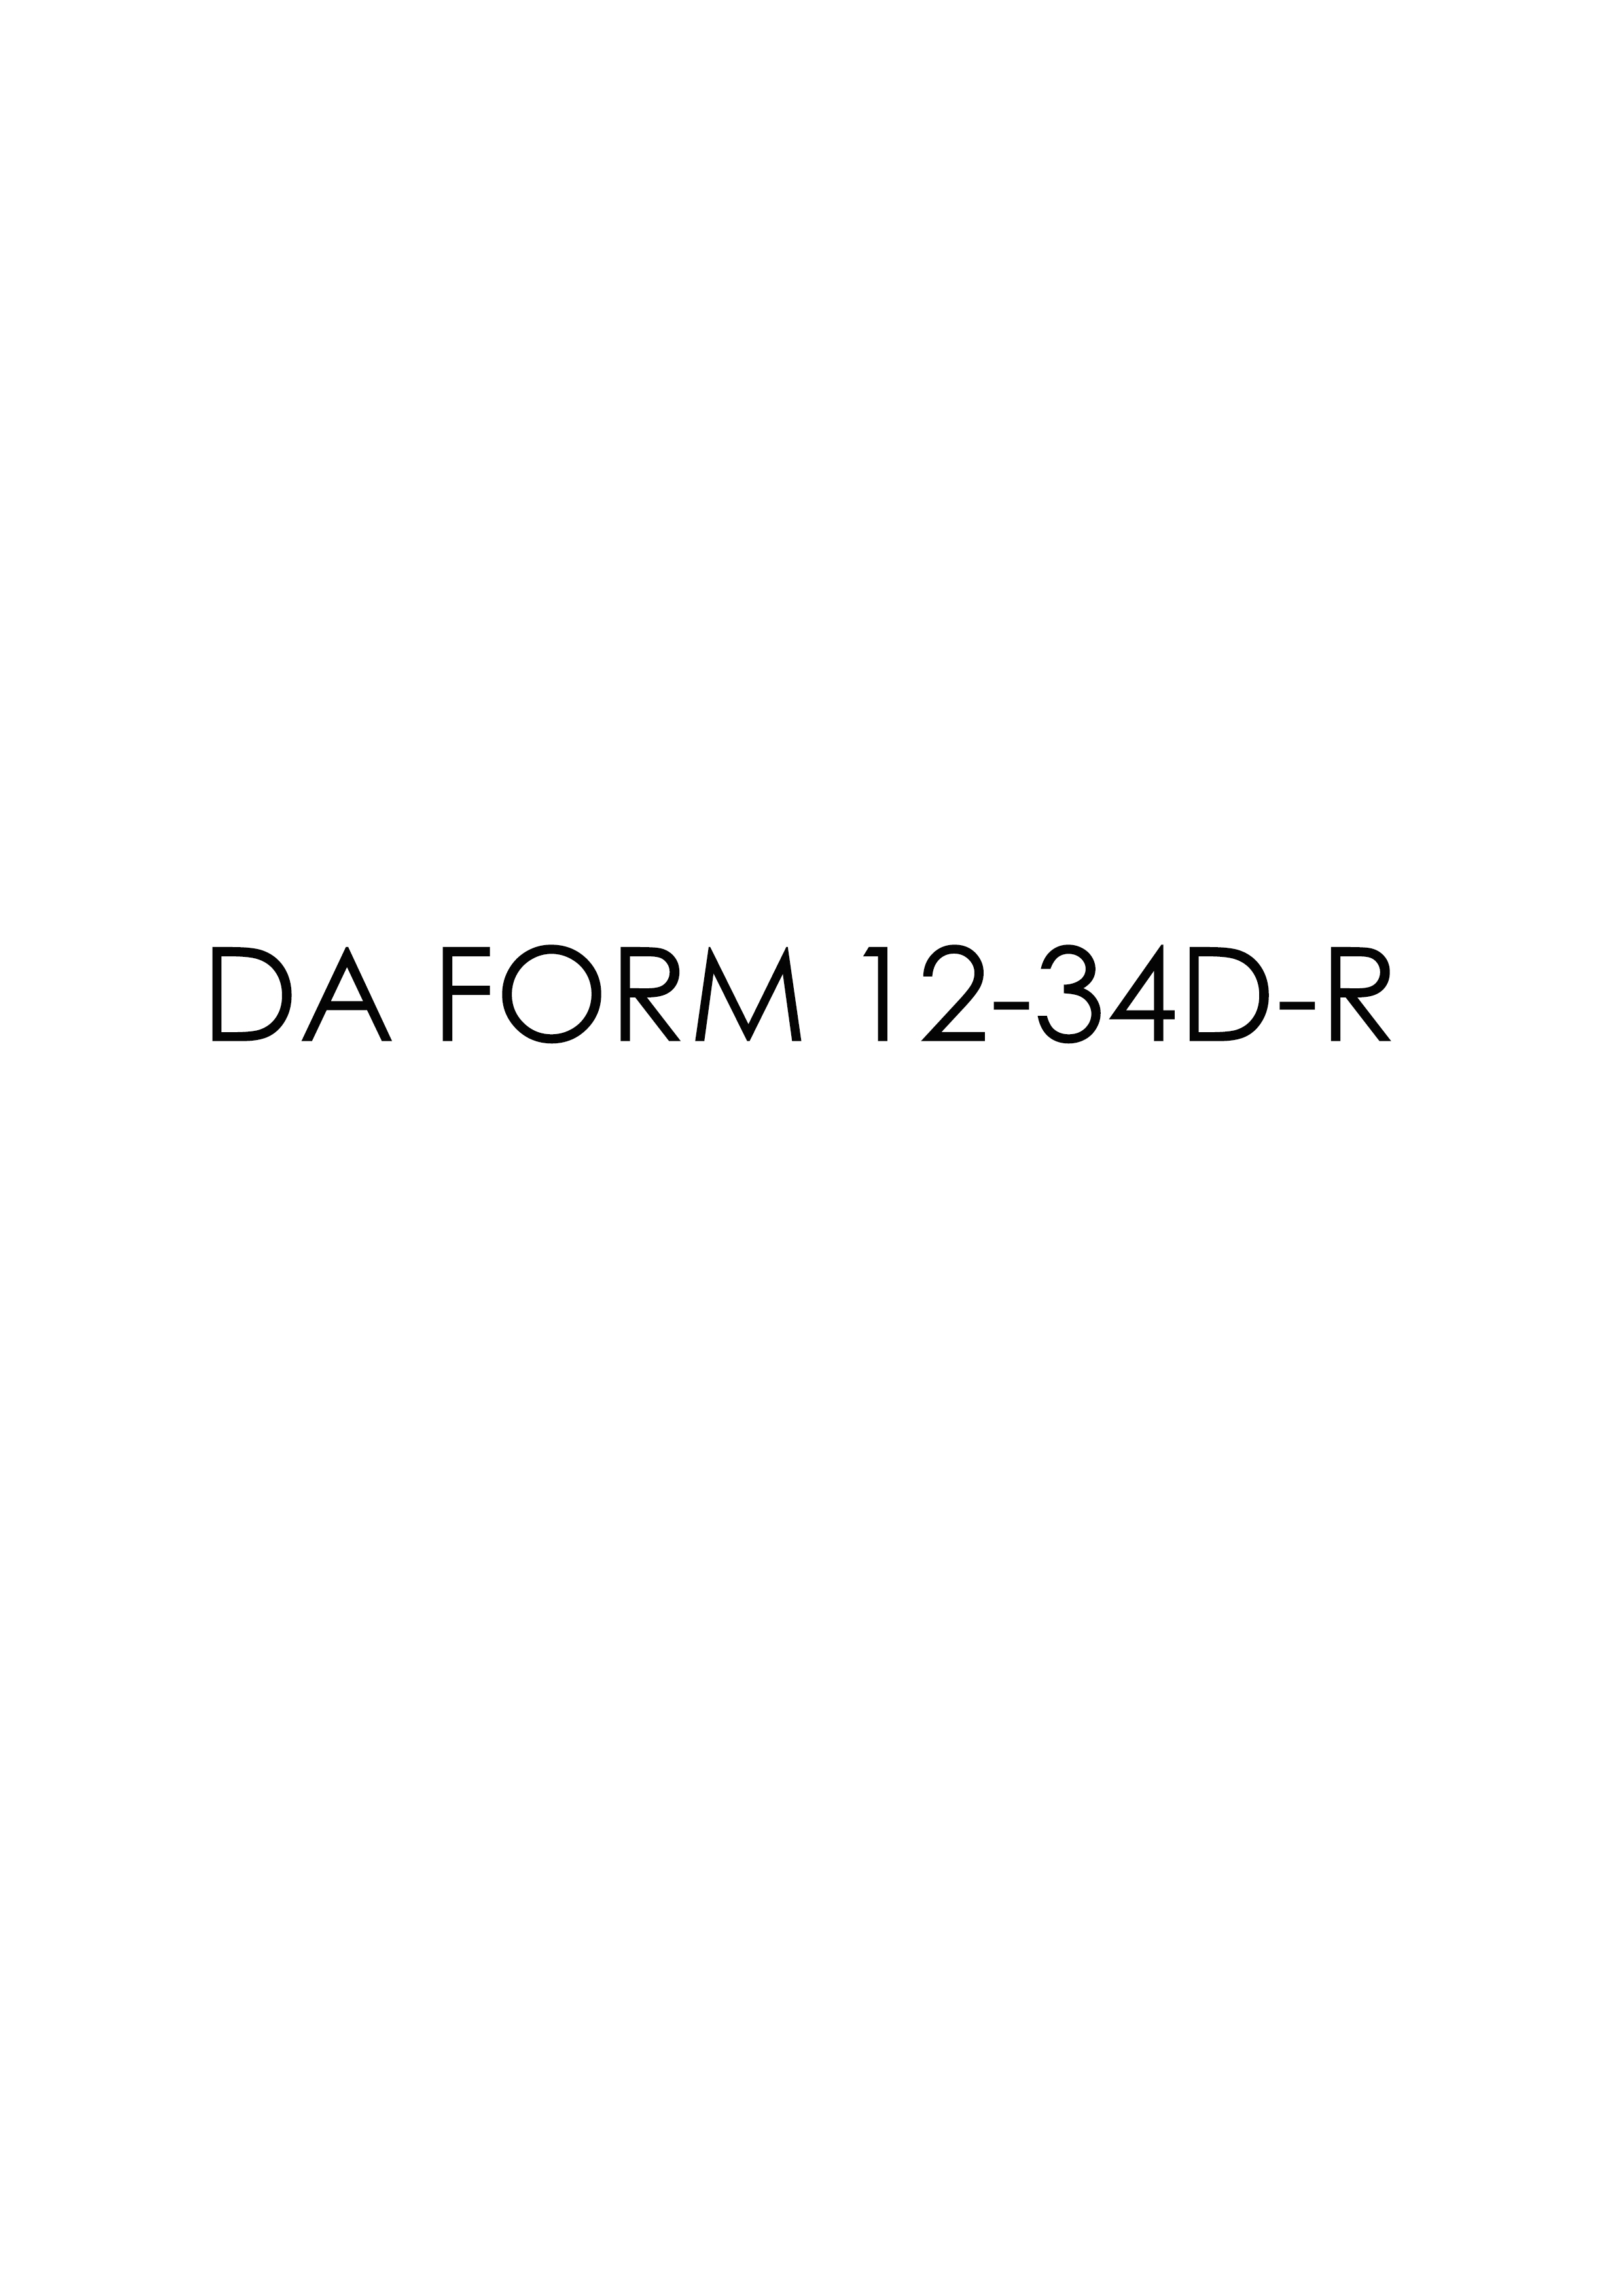 da Form 12-34D-R fillable